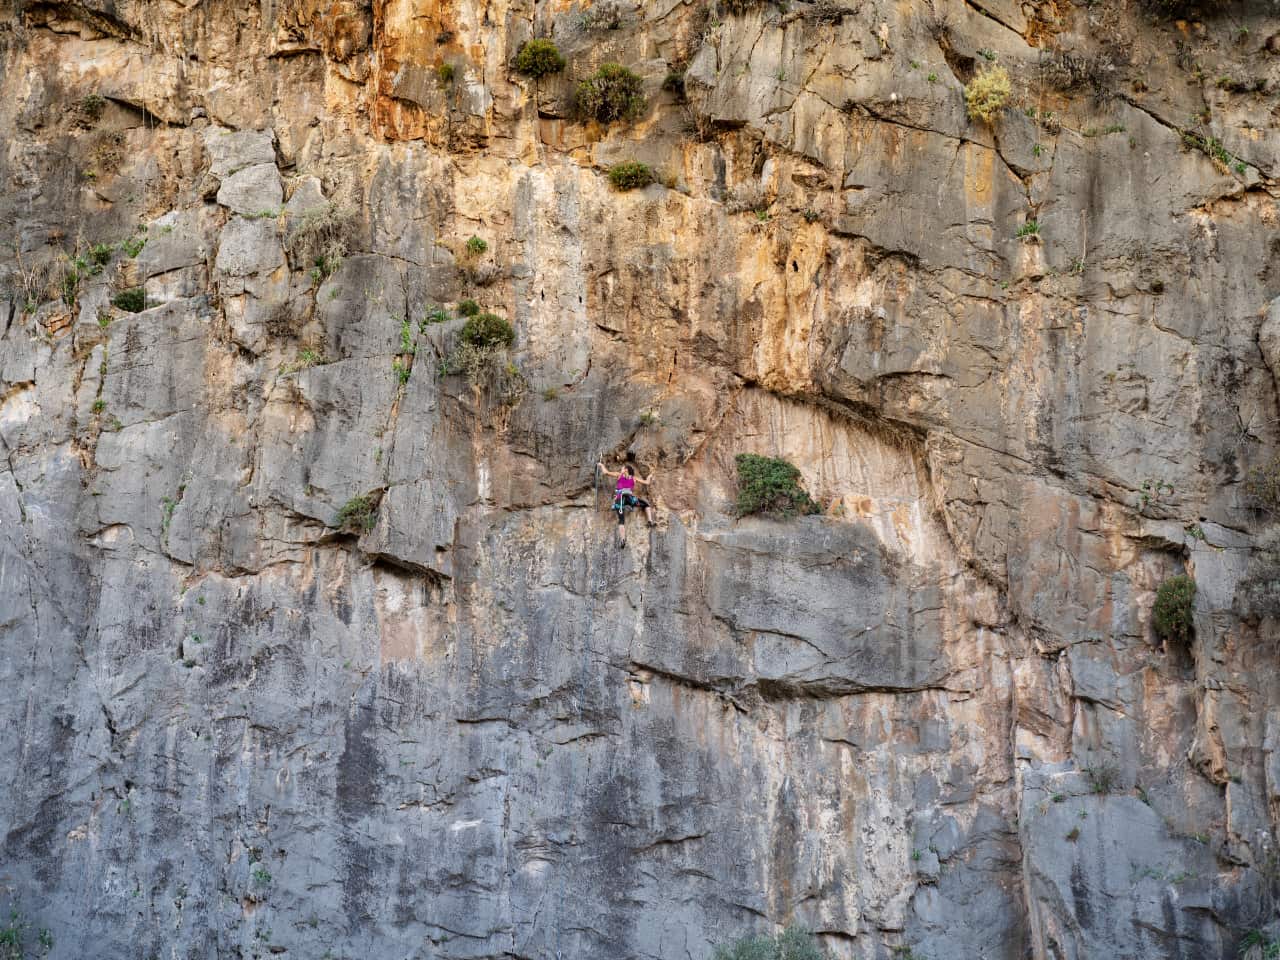 3 day rock climbing agiofaraggo Crete, agiofarago crete climbing, activities crete, south heraklion activity climbing, multi day climbing activity crete, best things to do crete, the crete you are looking for